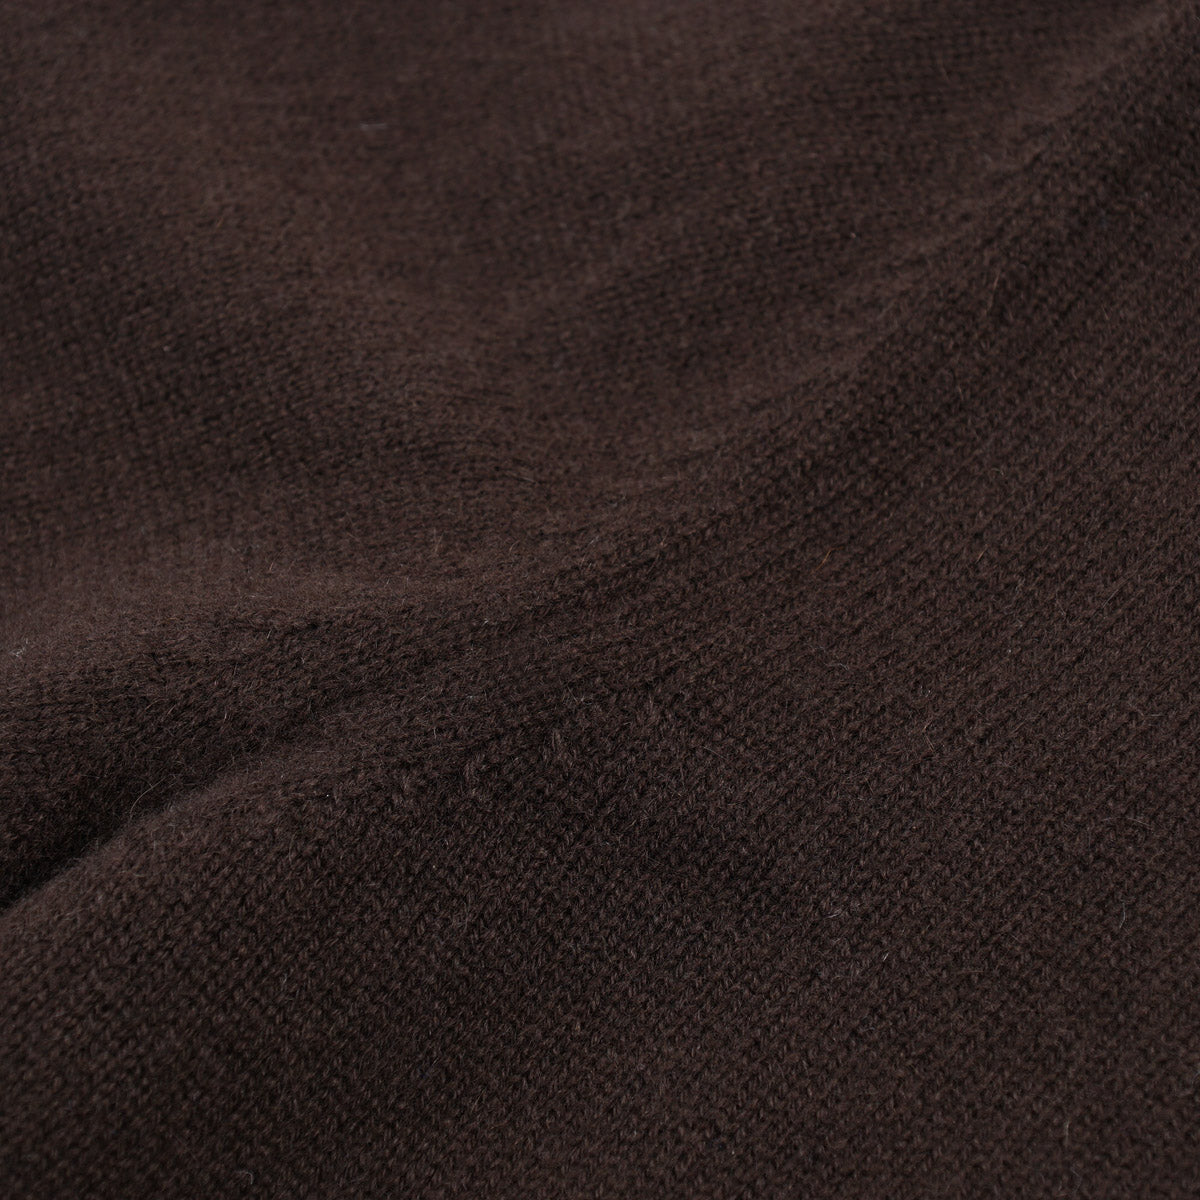 Kiton Contrast Knit Cashmere Sweater - Top Shelf Apparel